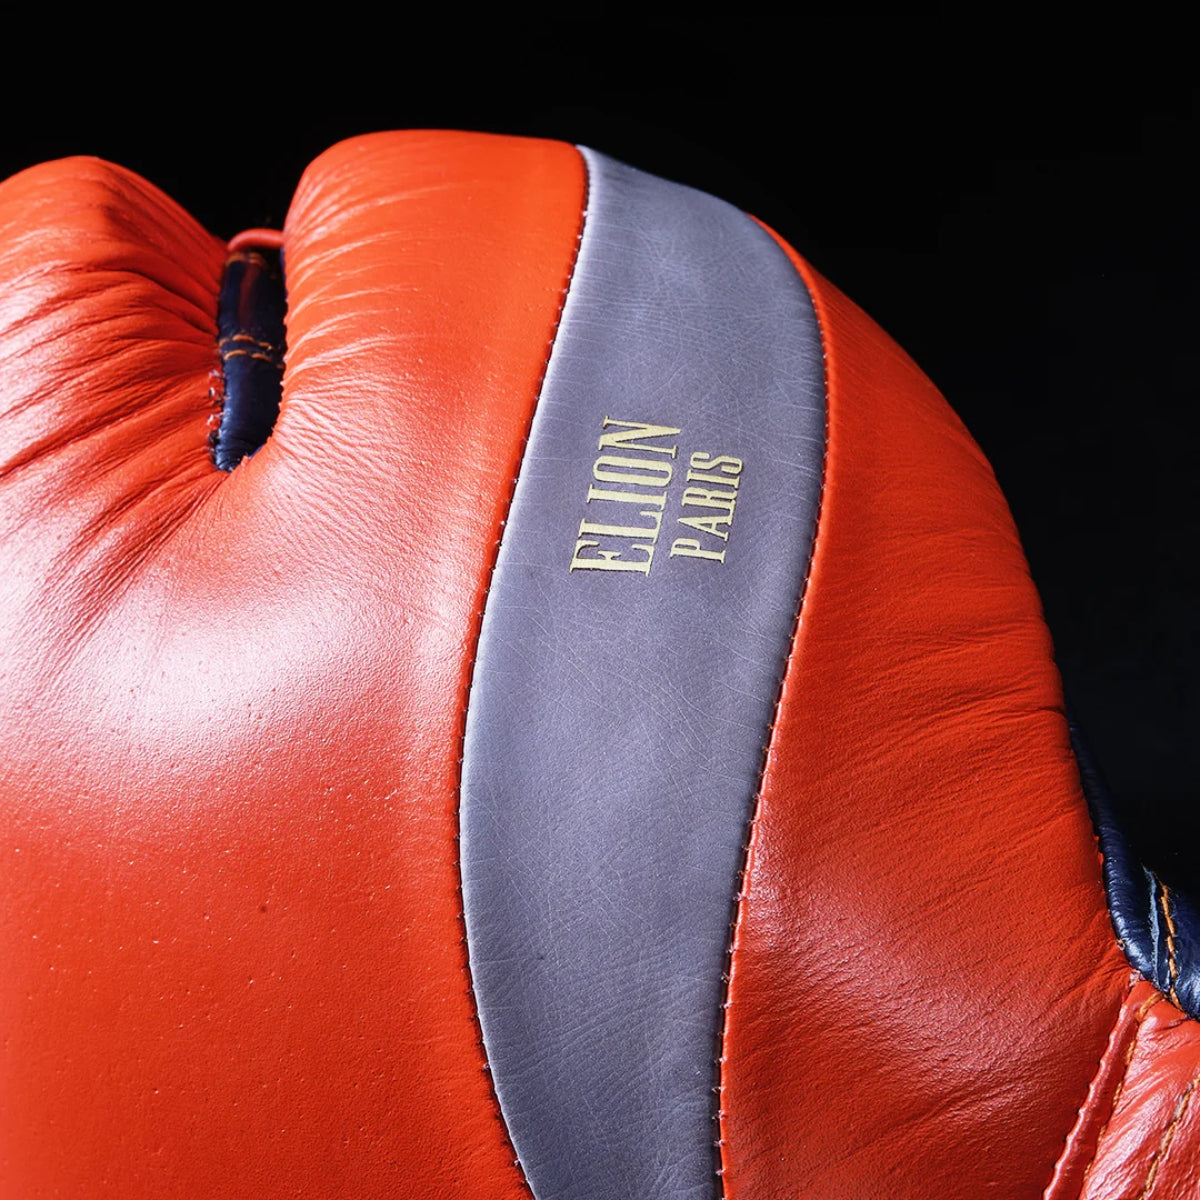 Collector Boxing Gloves, Limited Edition Dragon Ball Z - Majin Boo, Elion  Paris 